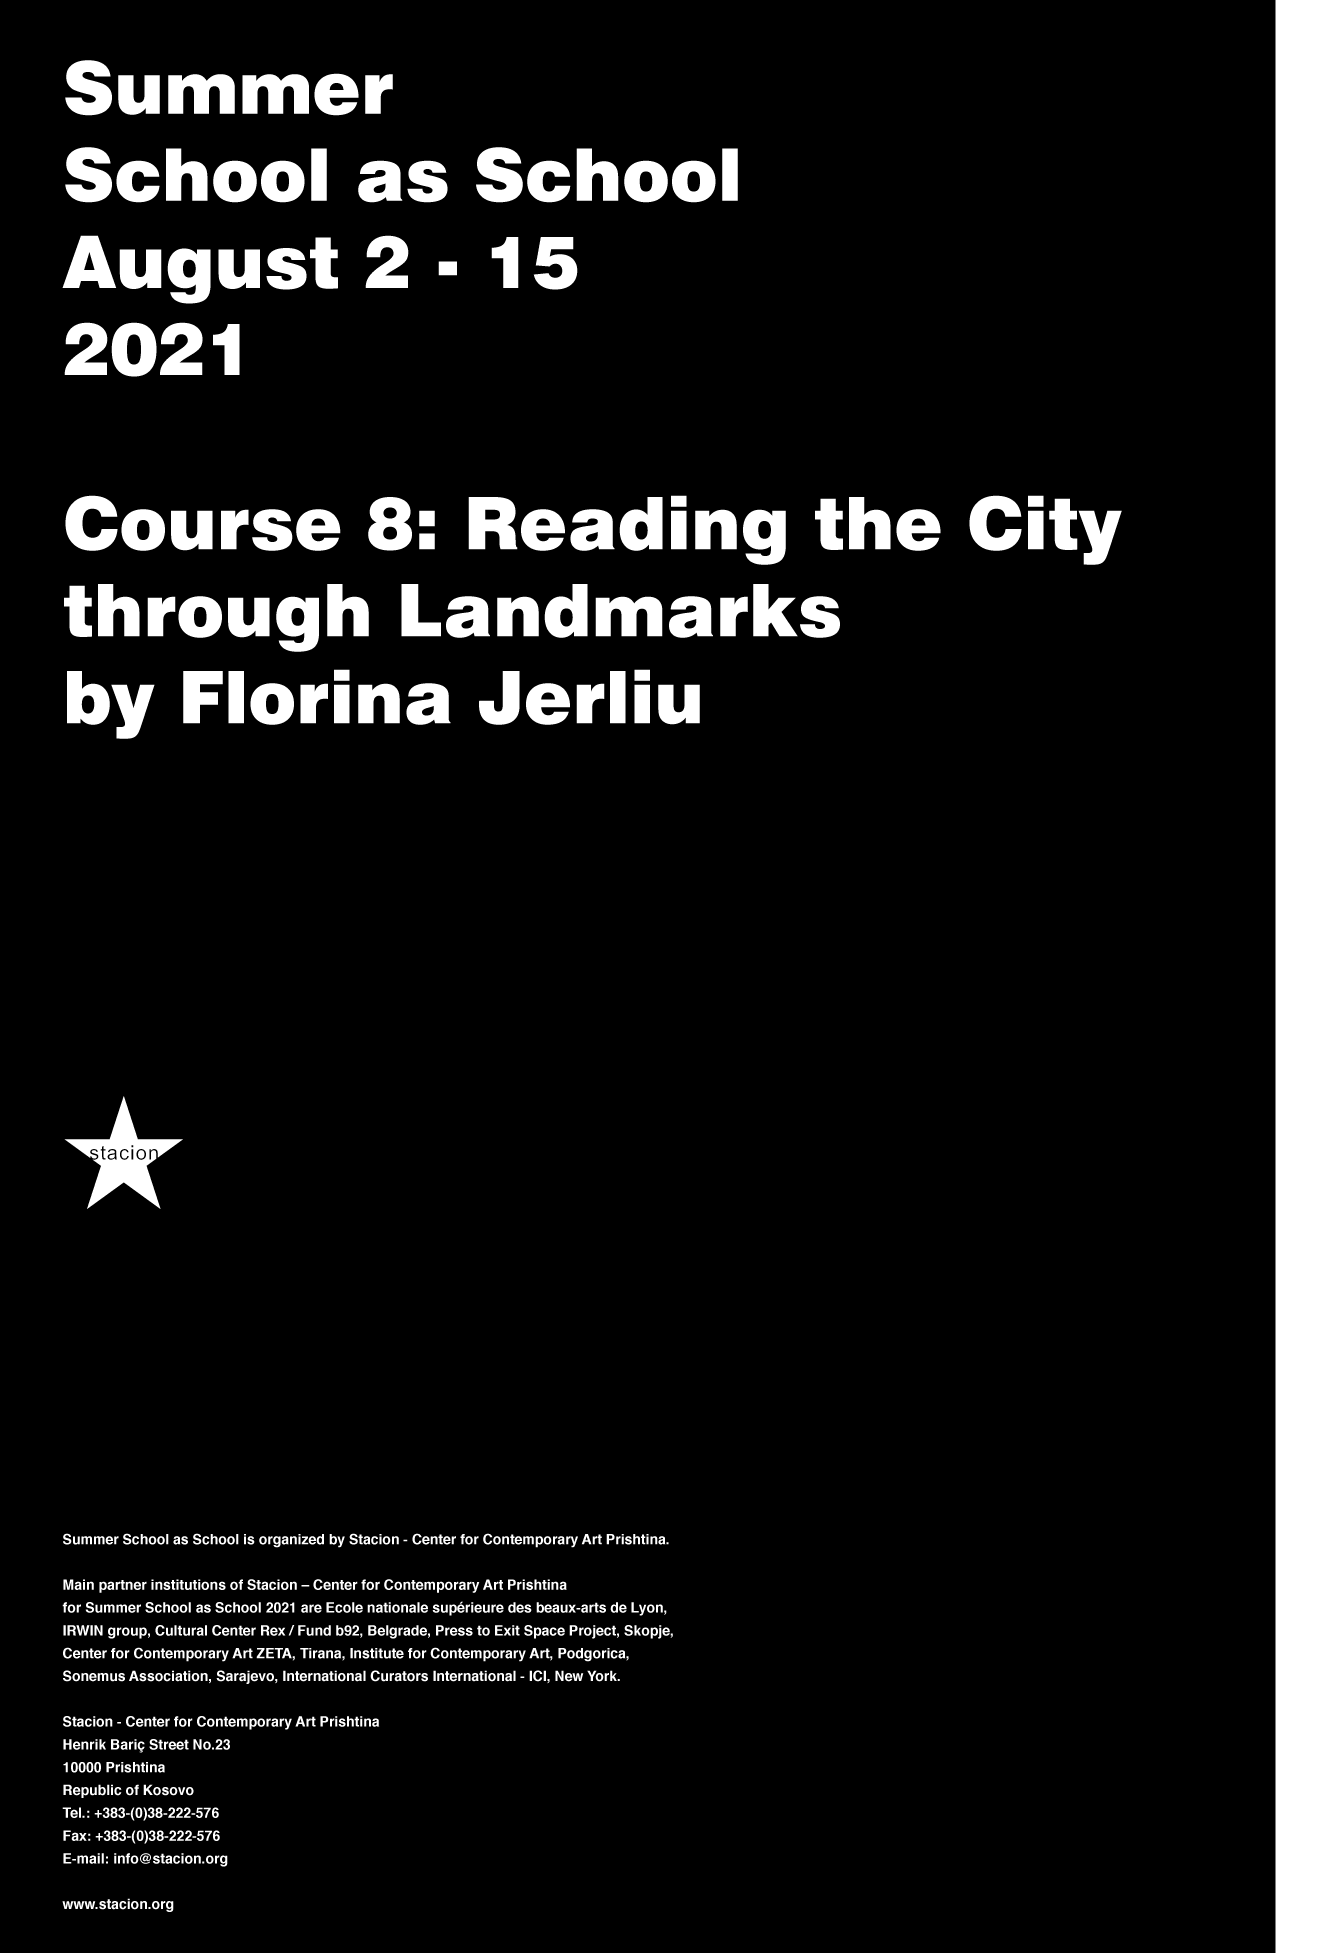 Course 8: Reading the City through Landmarks